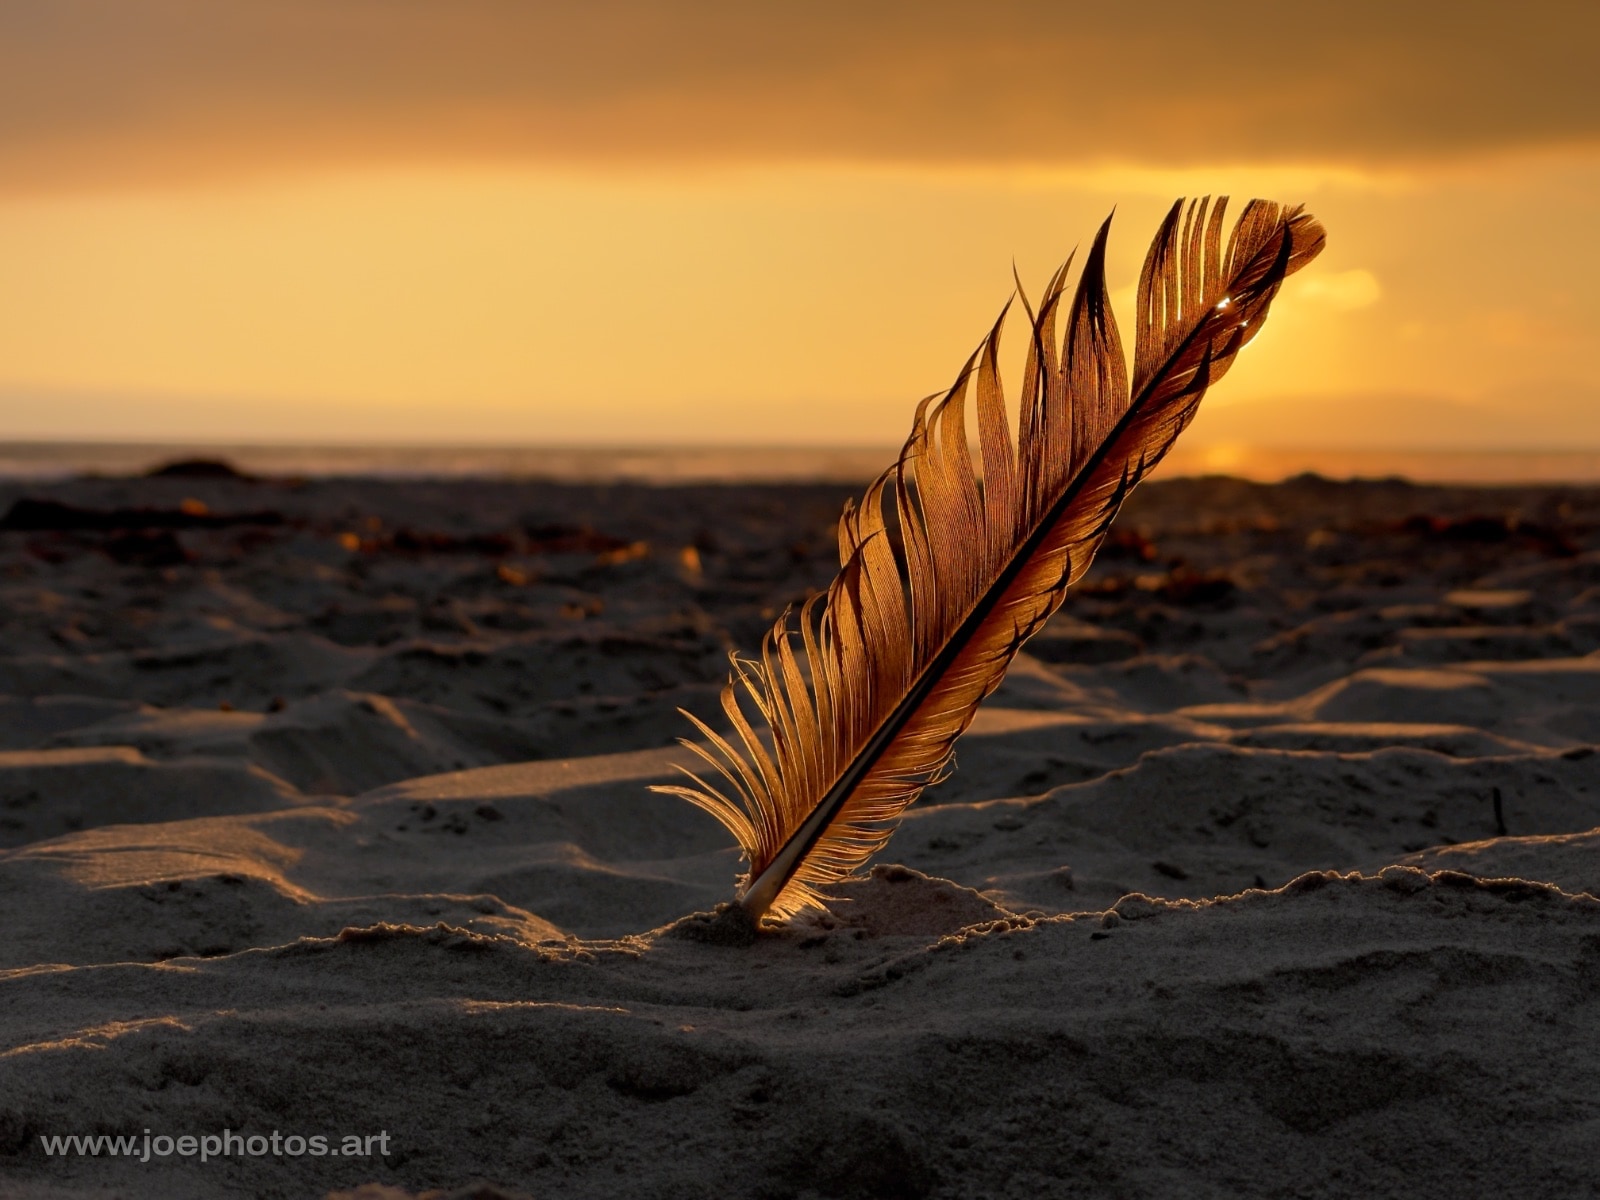 Translucent feather at beach sunset.